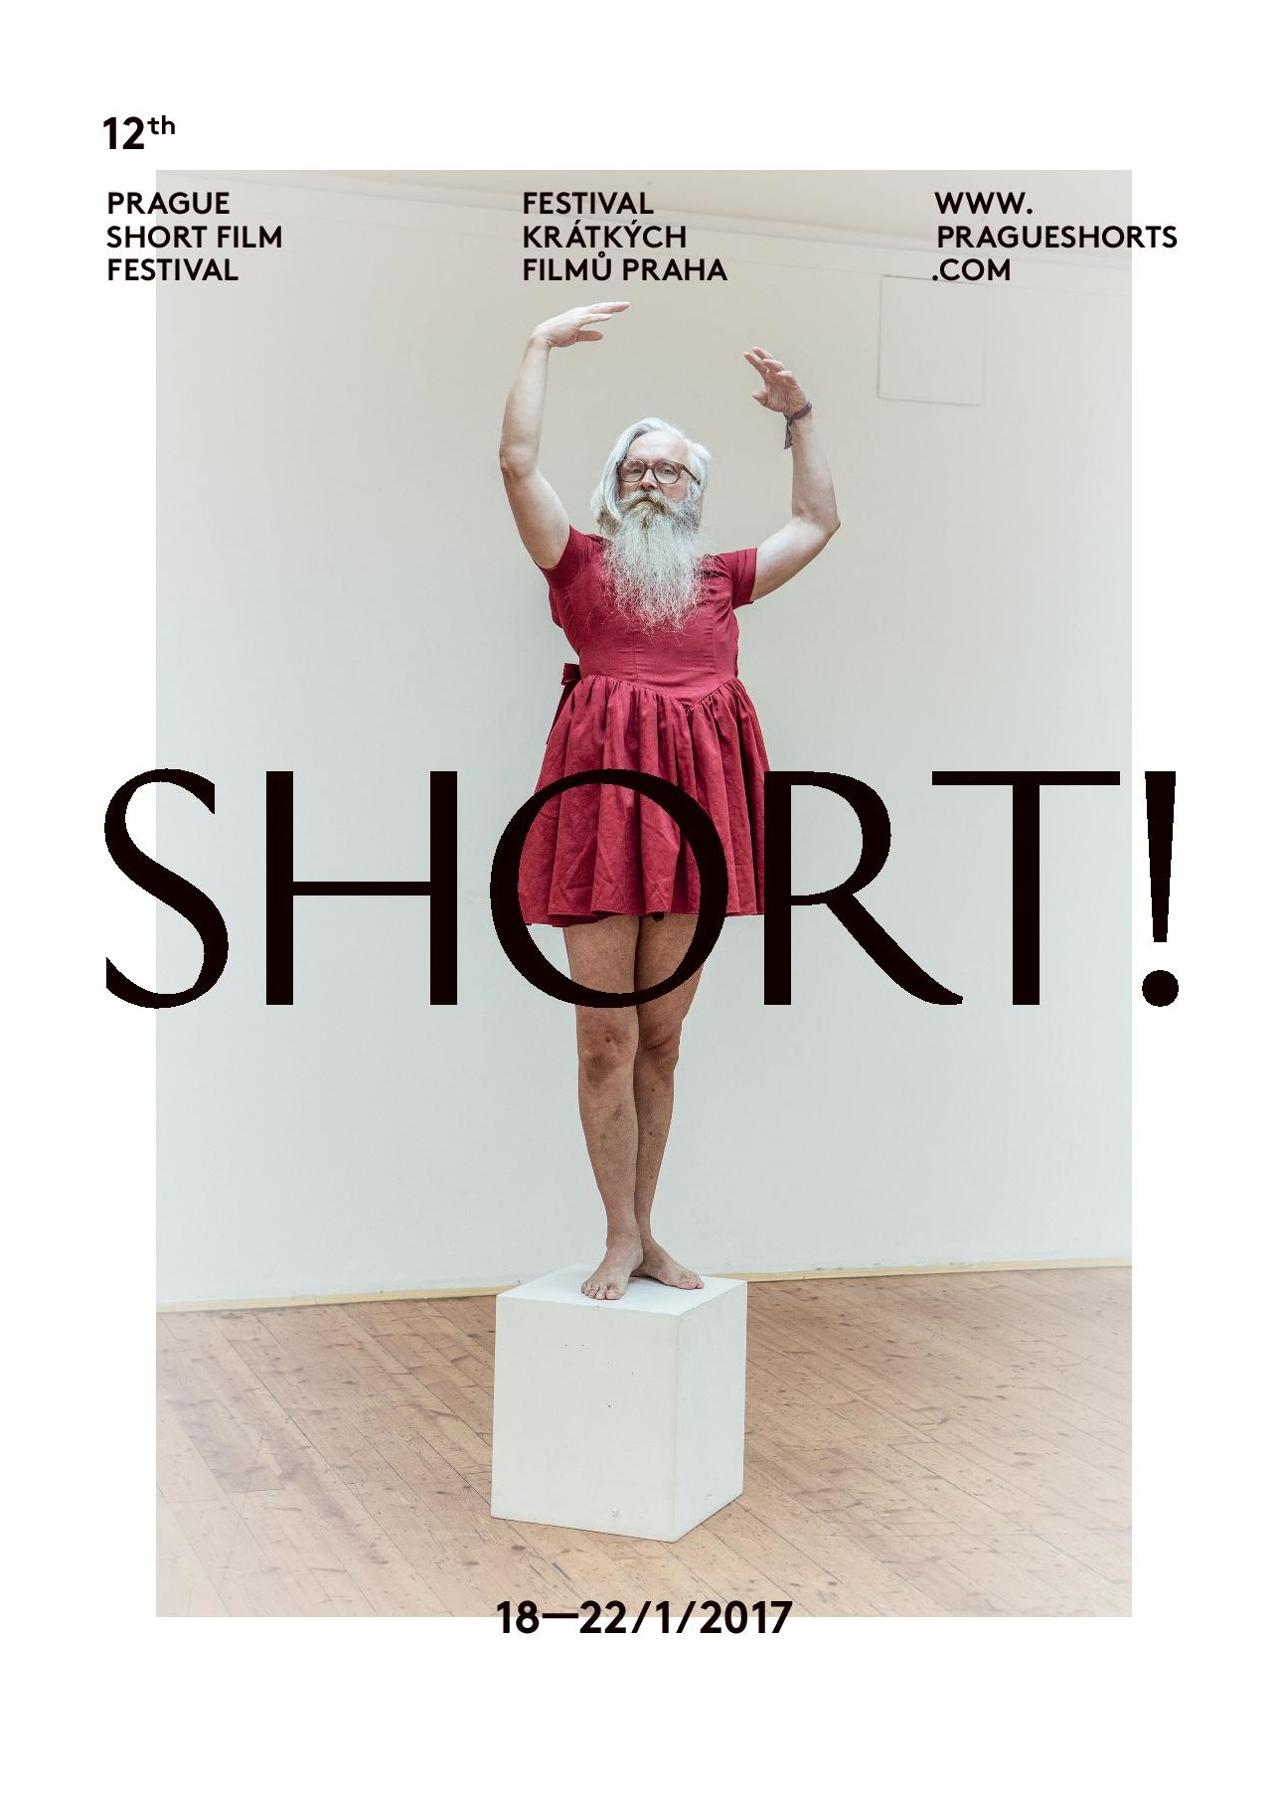 The ShortCut: Motivating Czech Film Industry to Make Short Films